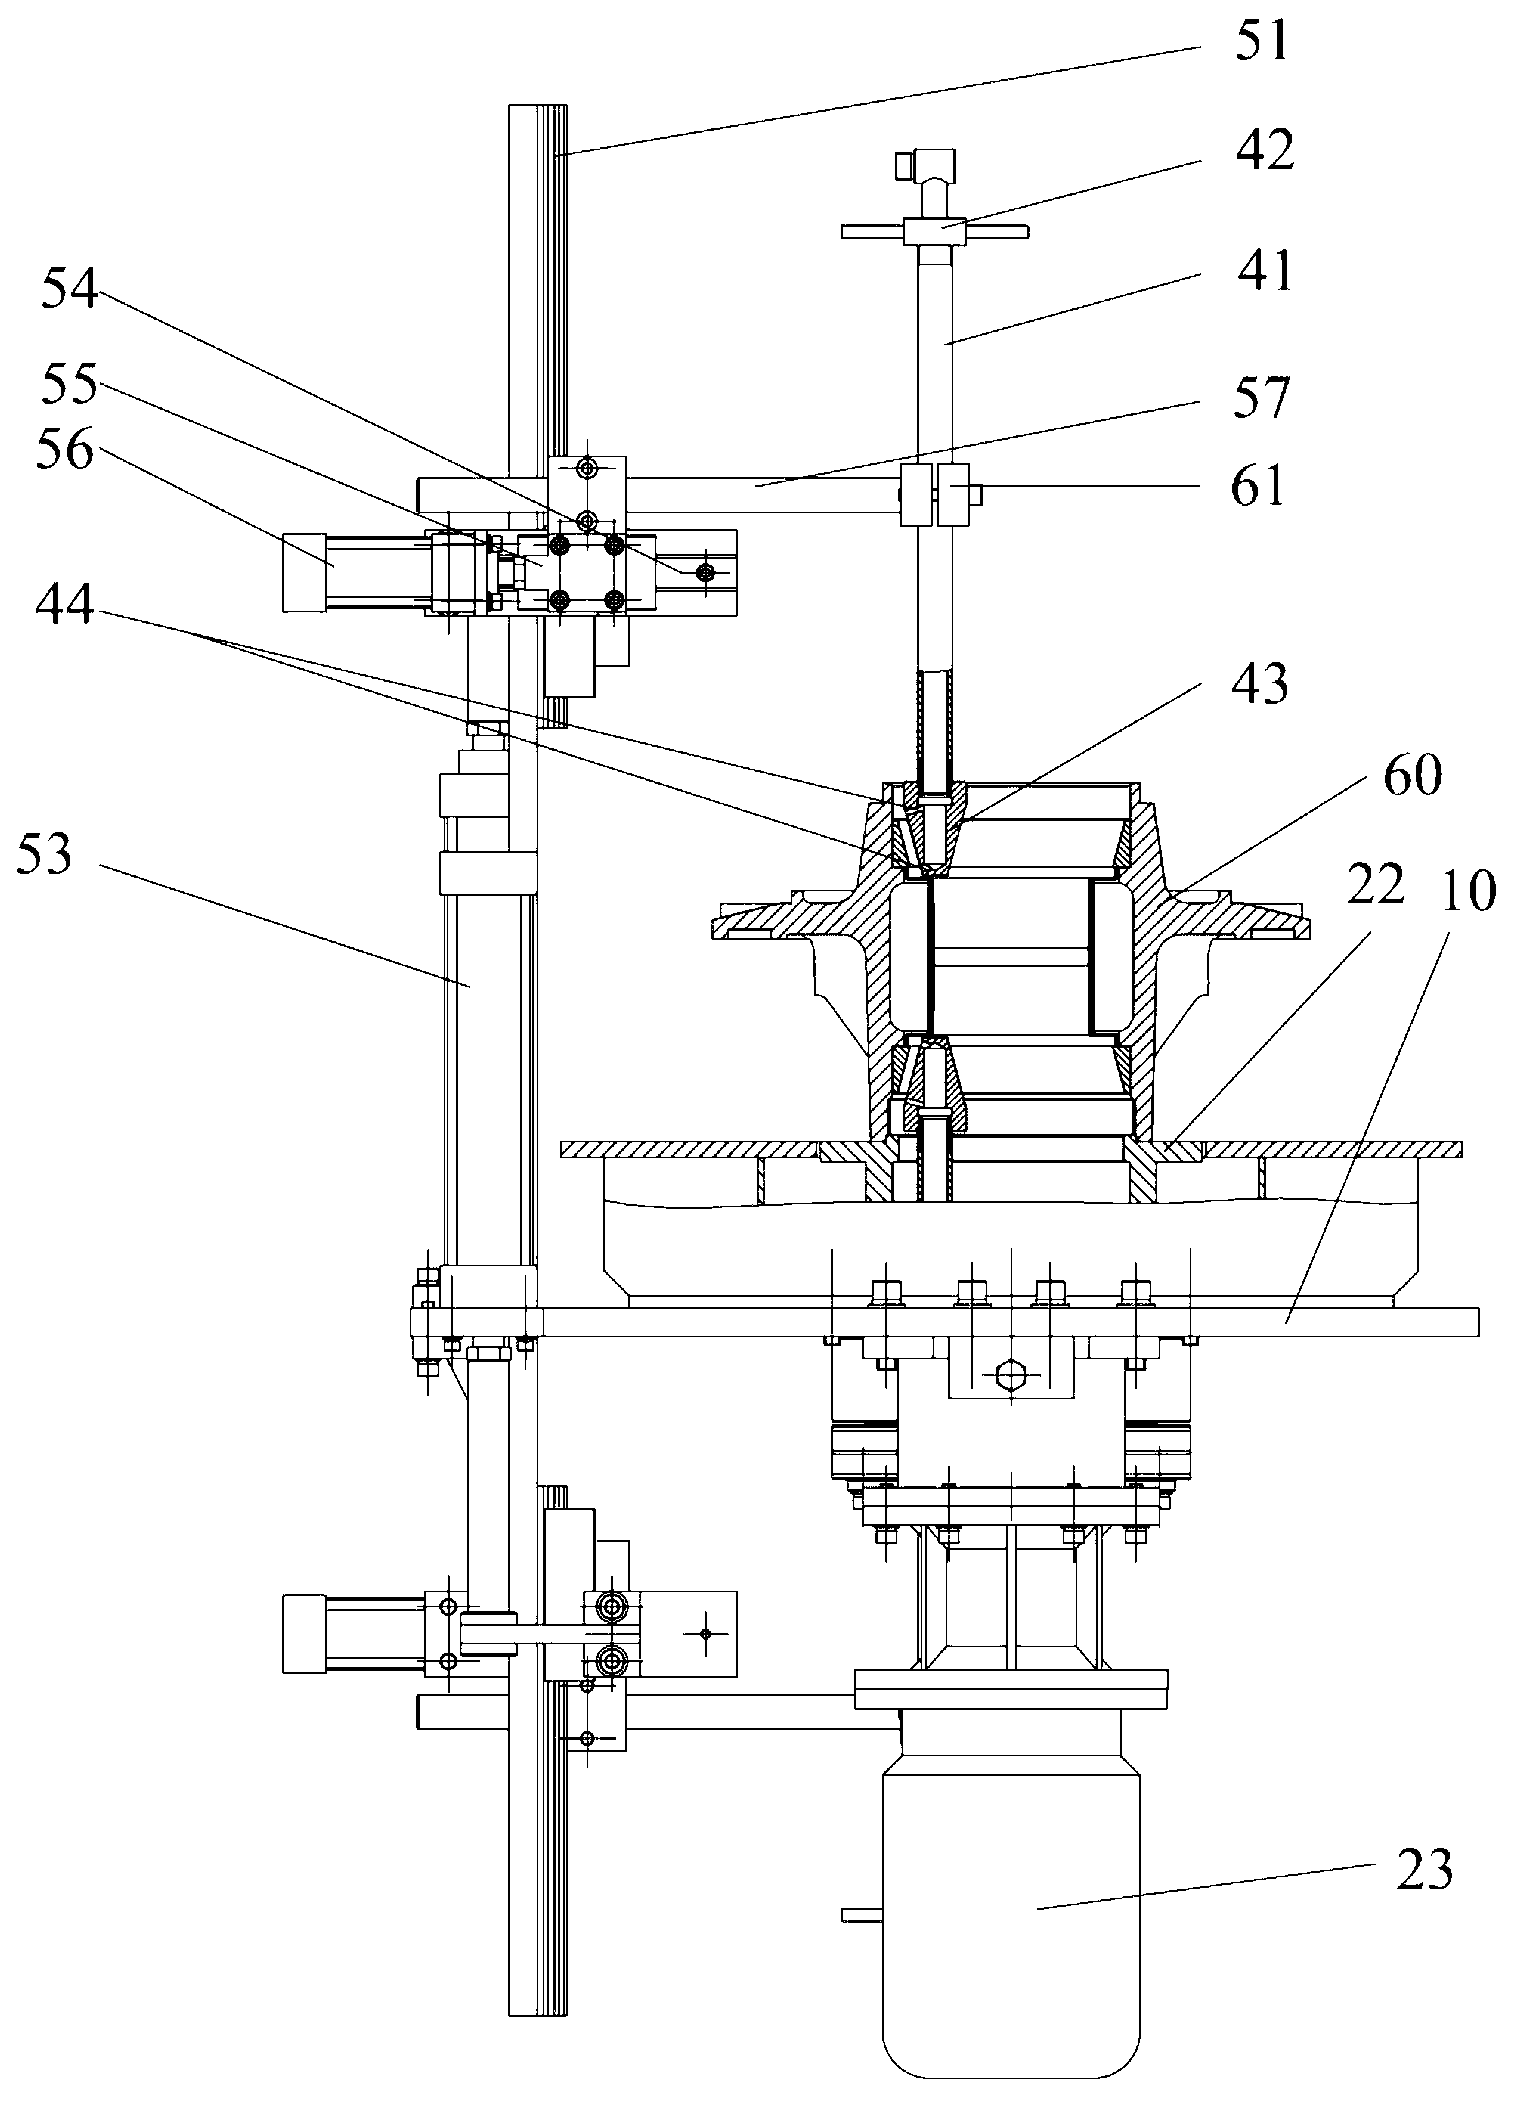 Automatic hub oiling machine